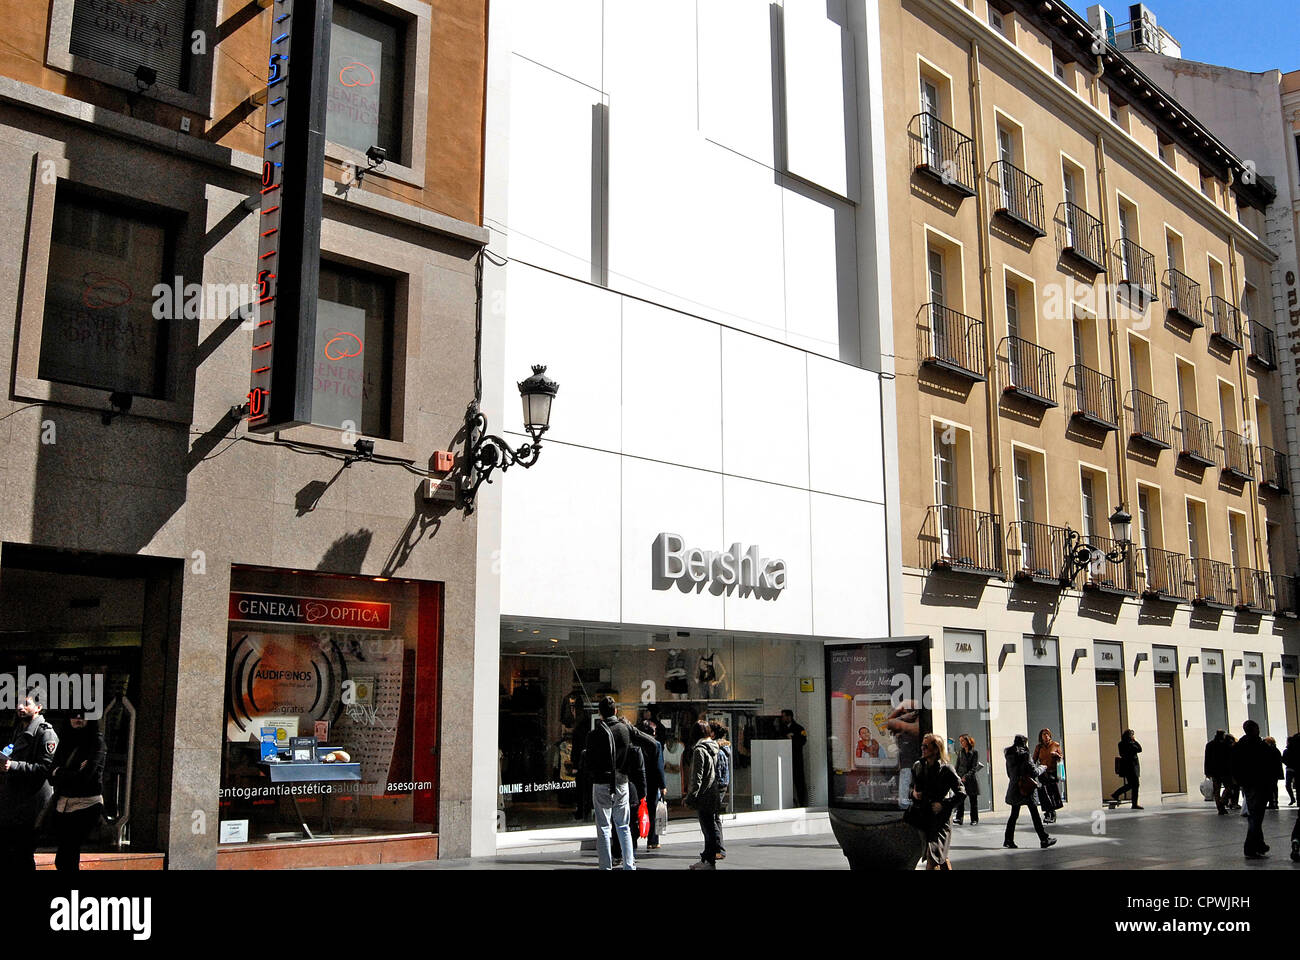 Bershka boutique, Madrid, Spain Stock Photo - Alamy